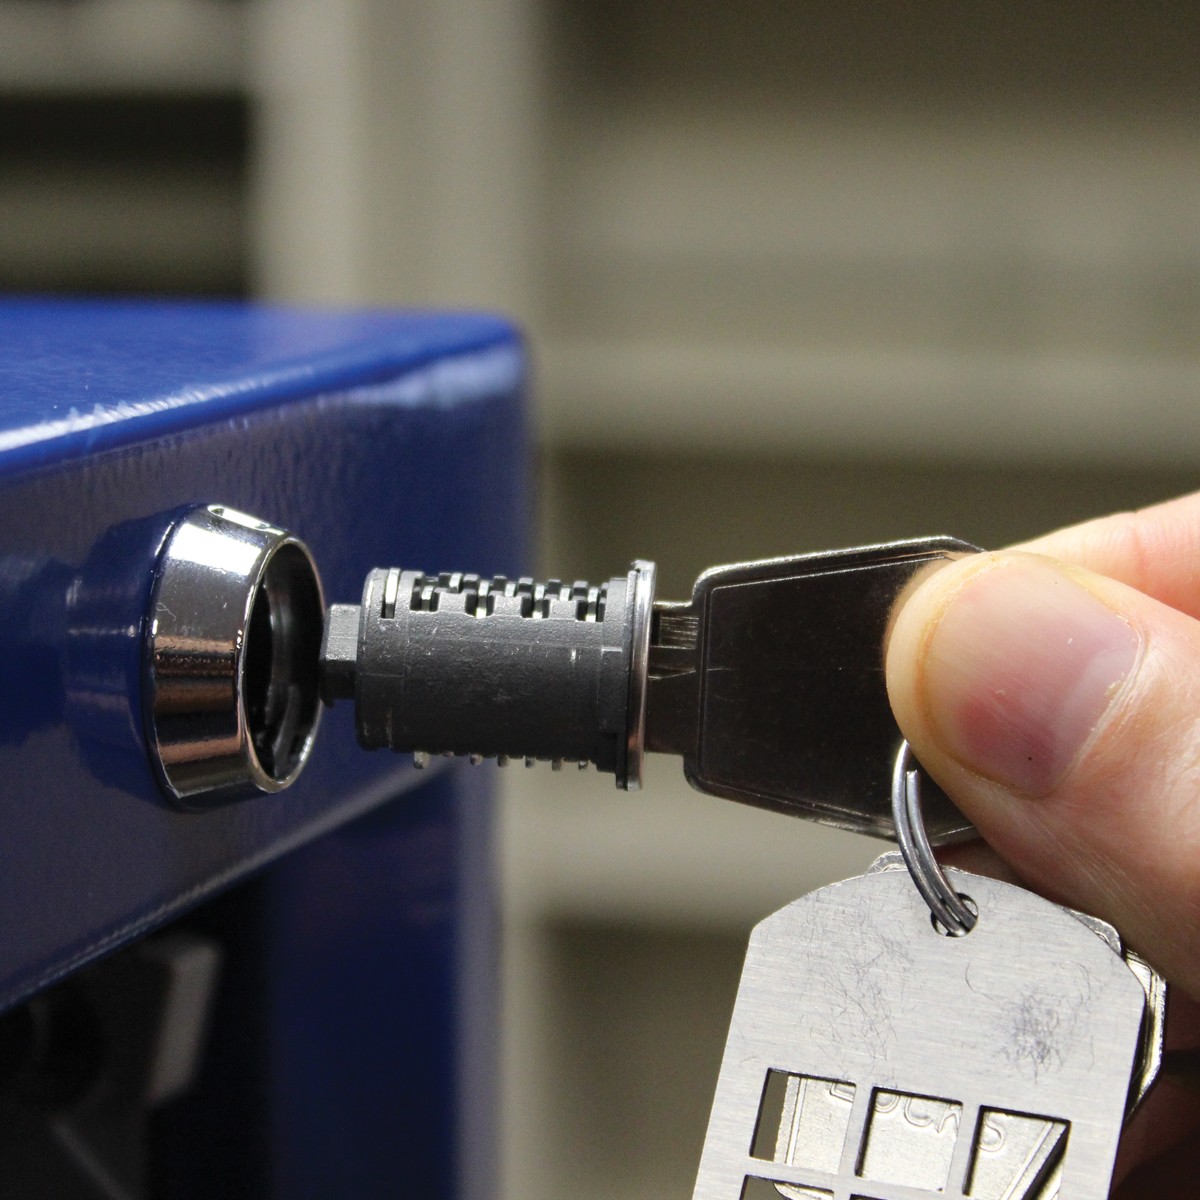 modular drawers locks core removal industrial